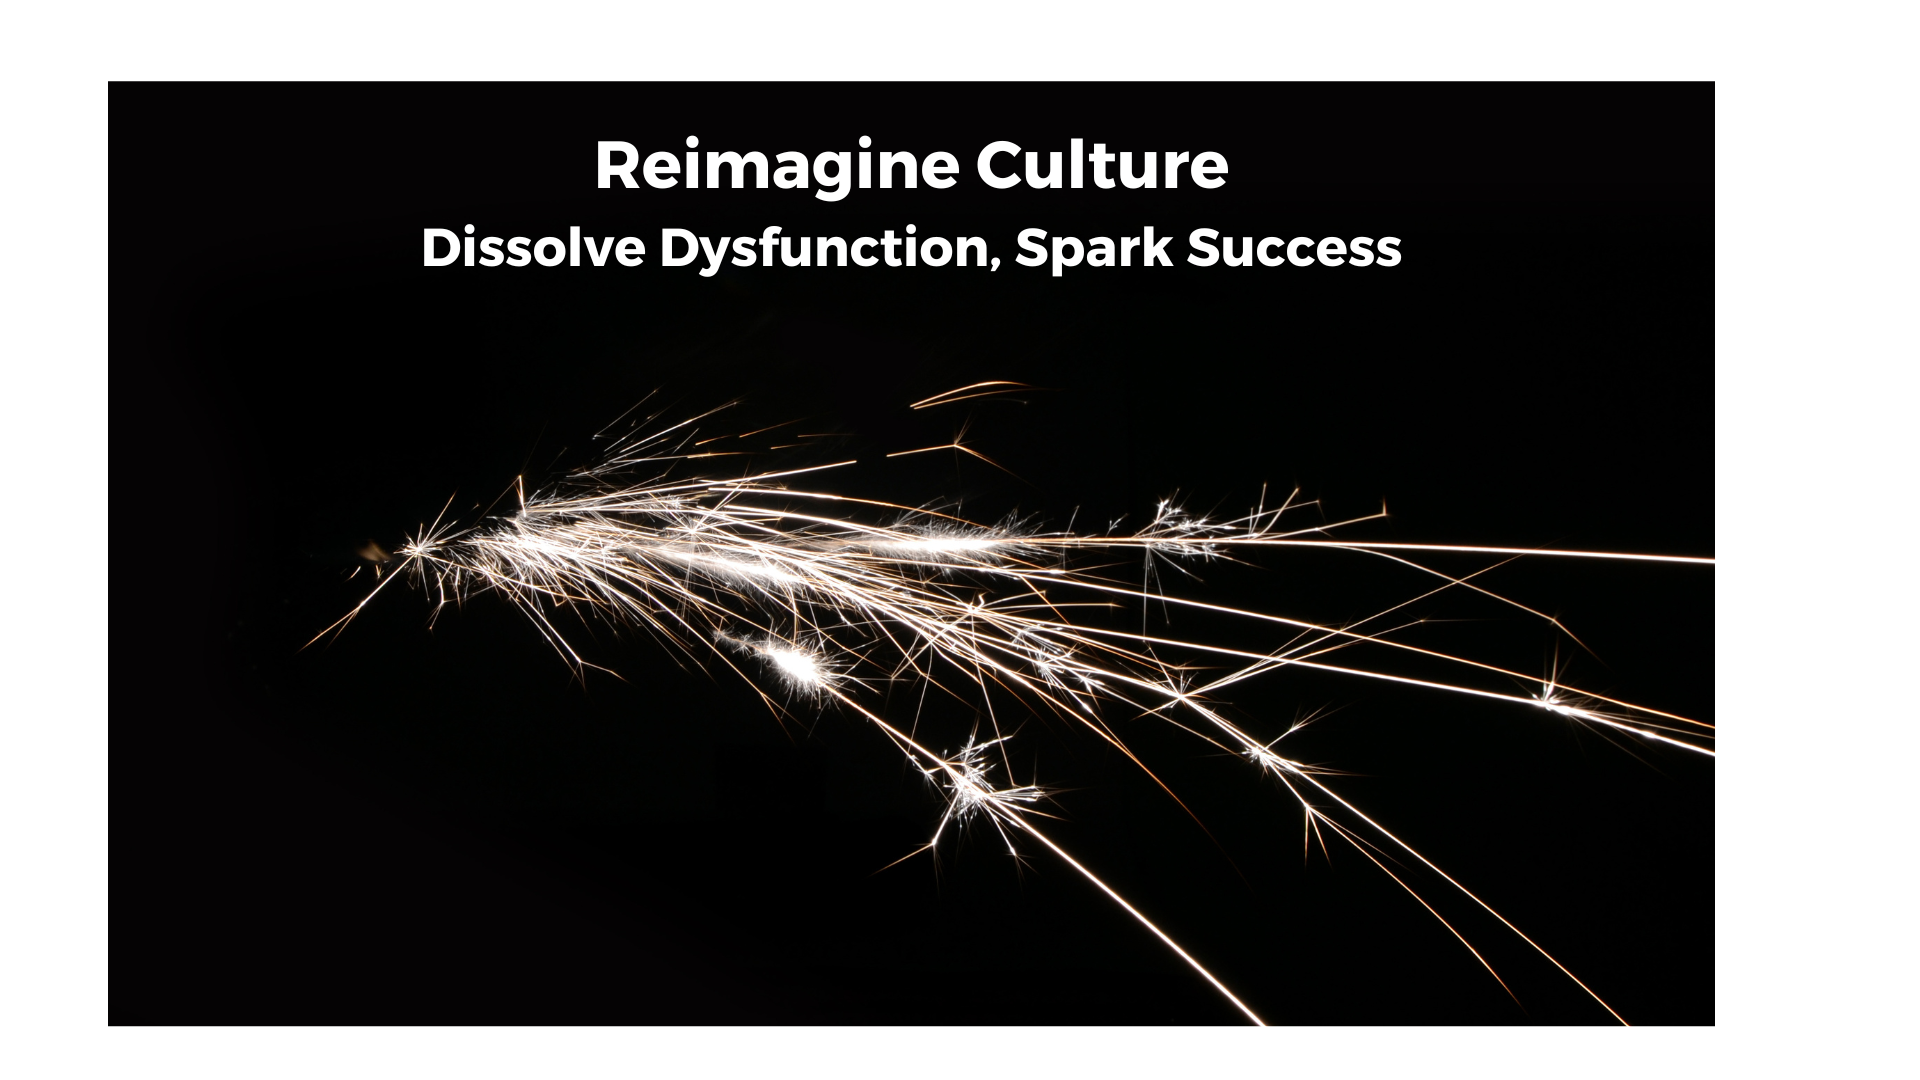 Sparks Flying Organizational Culture